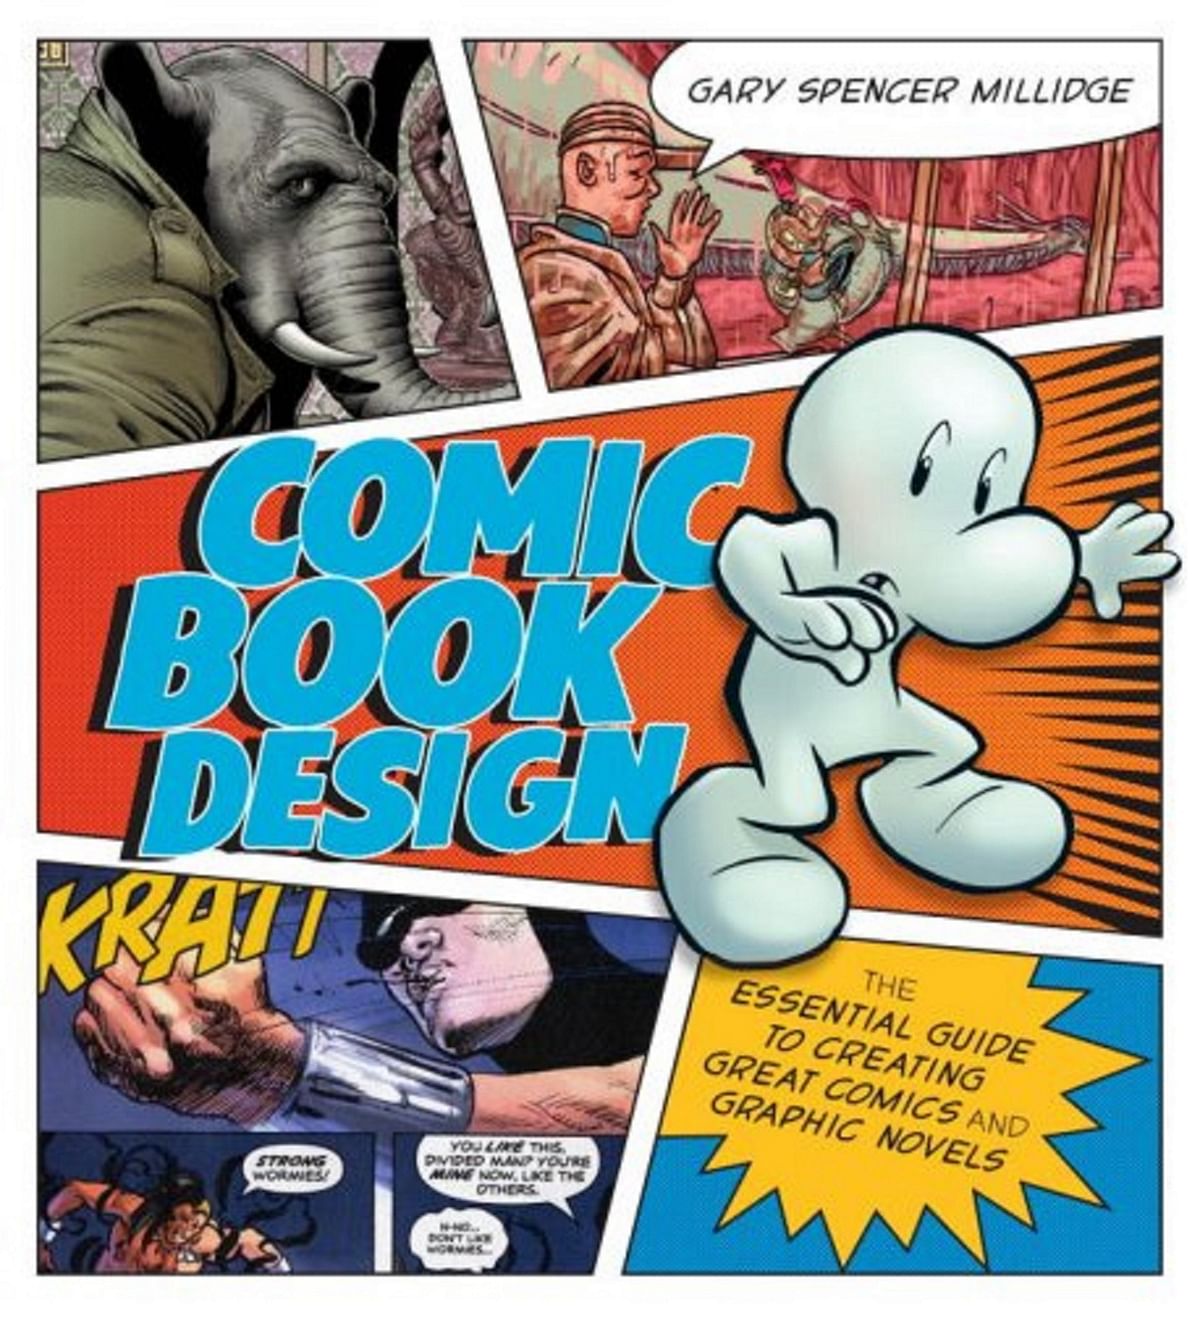 Comic Book Design. Credit: Special Arrangement